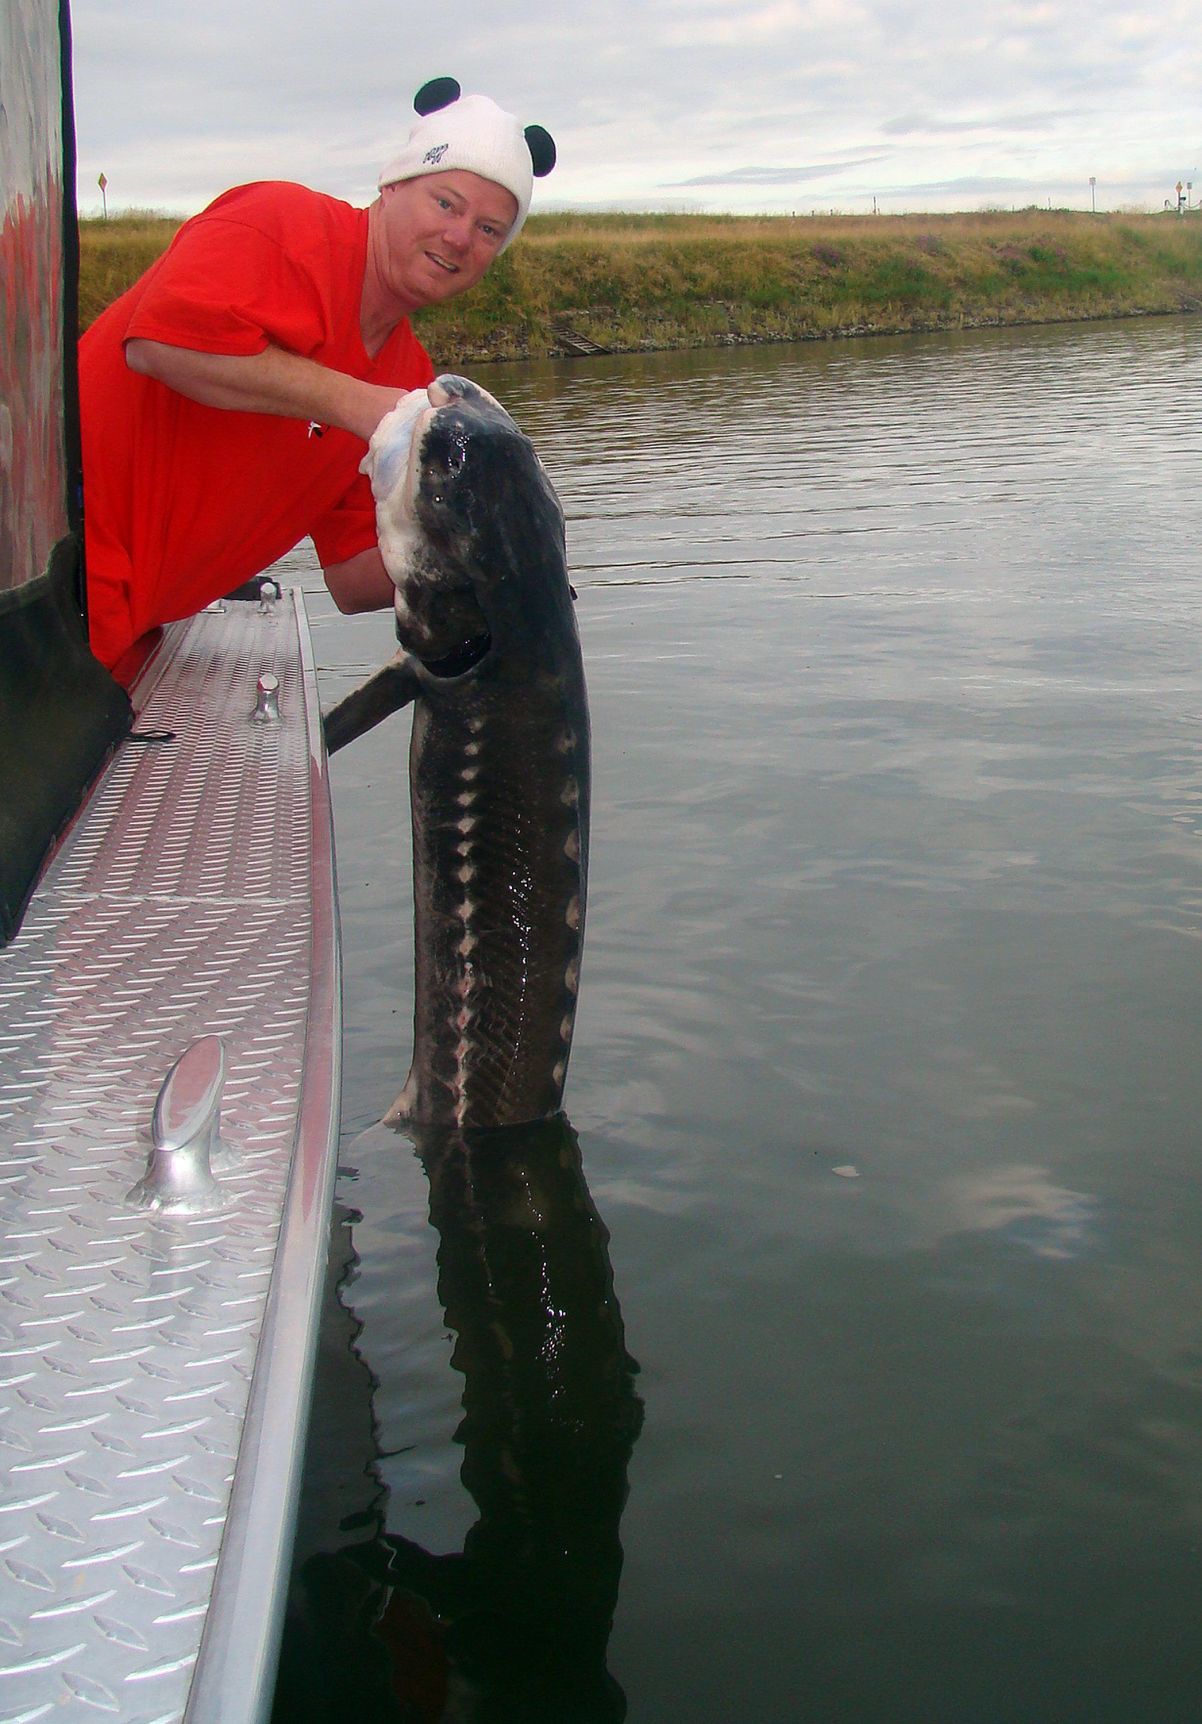 Wrangling with white sturgeon on Oregon's Columbia River | Sports